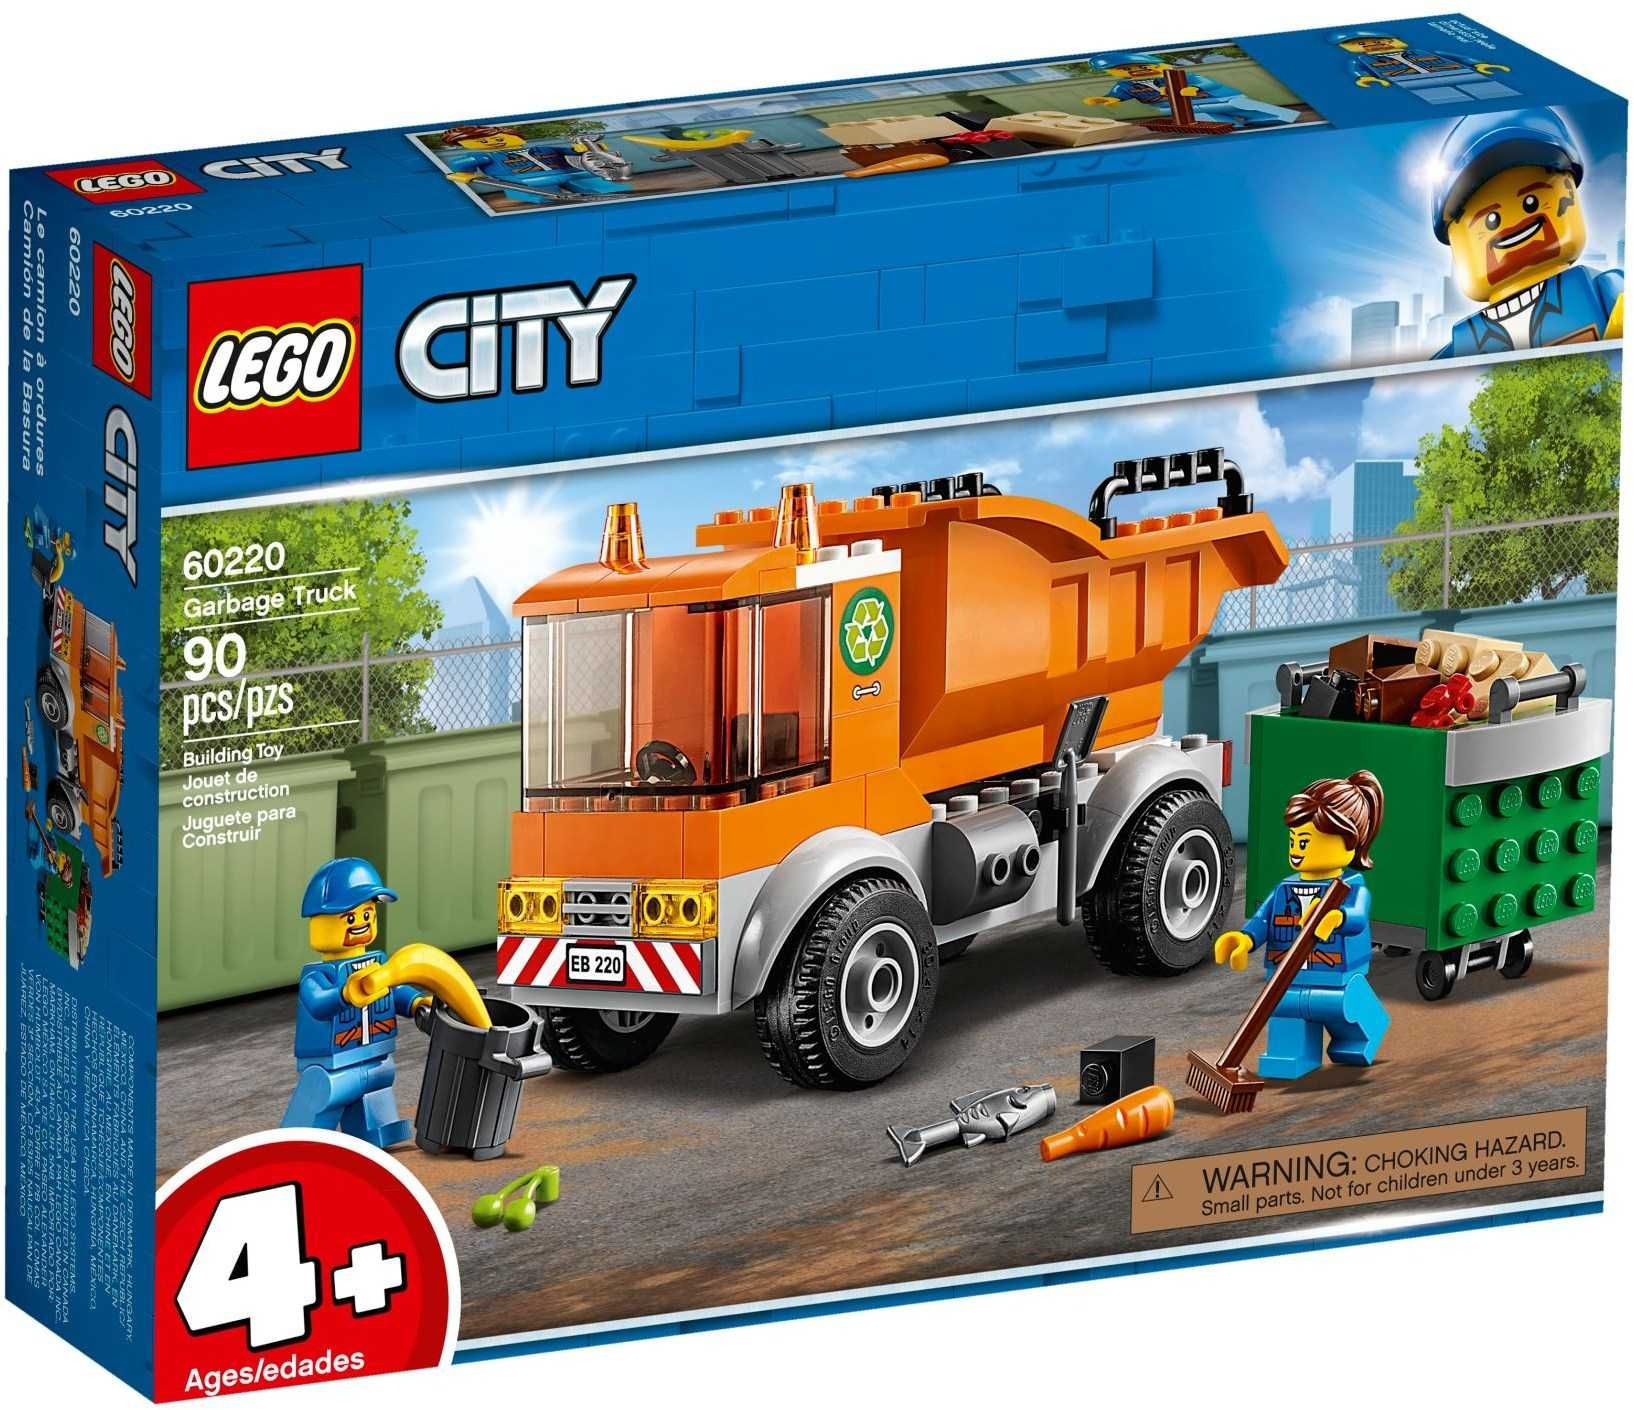 Lego CITY diverse modele - NOI sigilate - pret unic